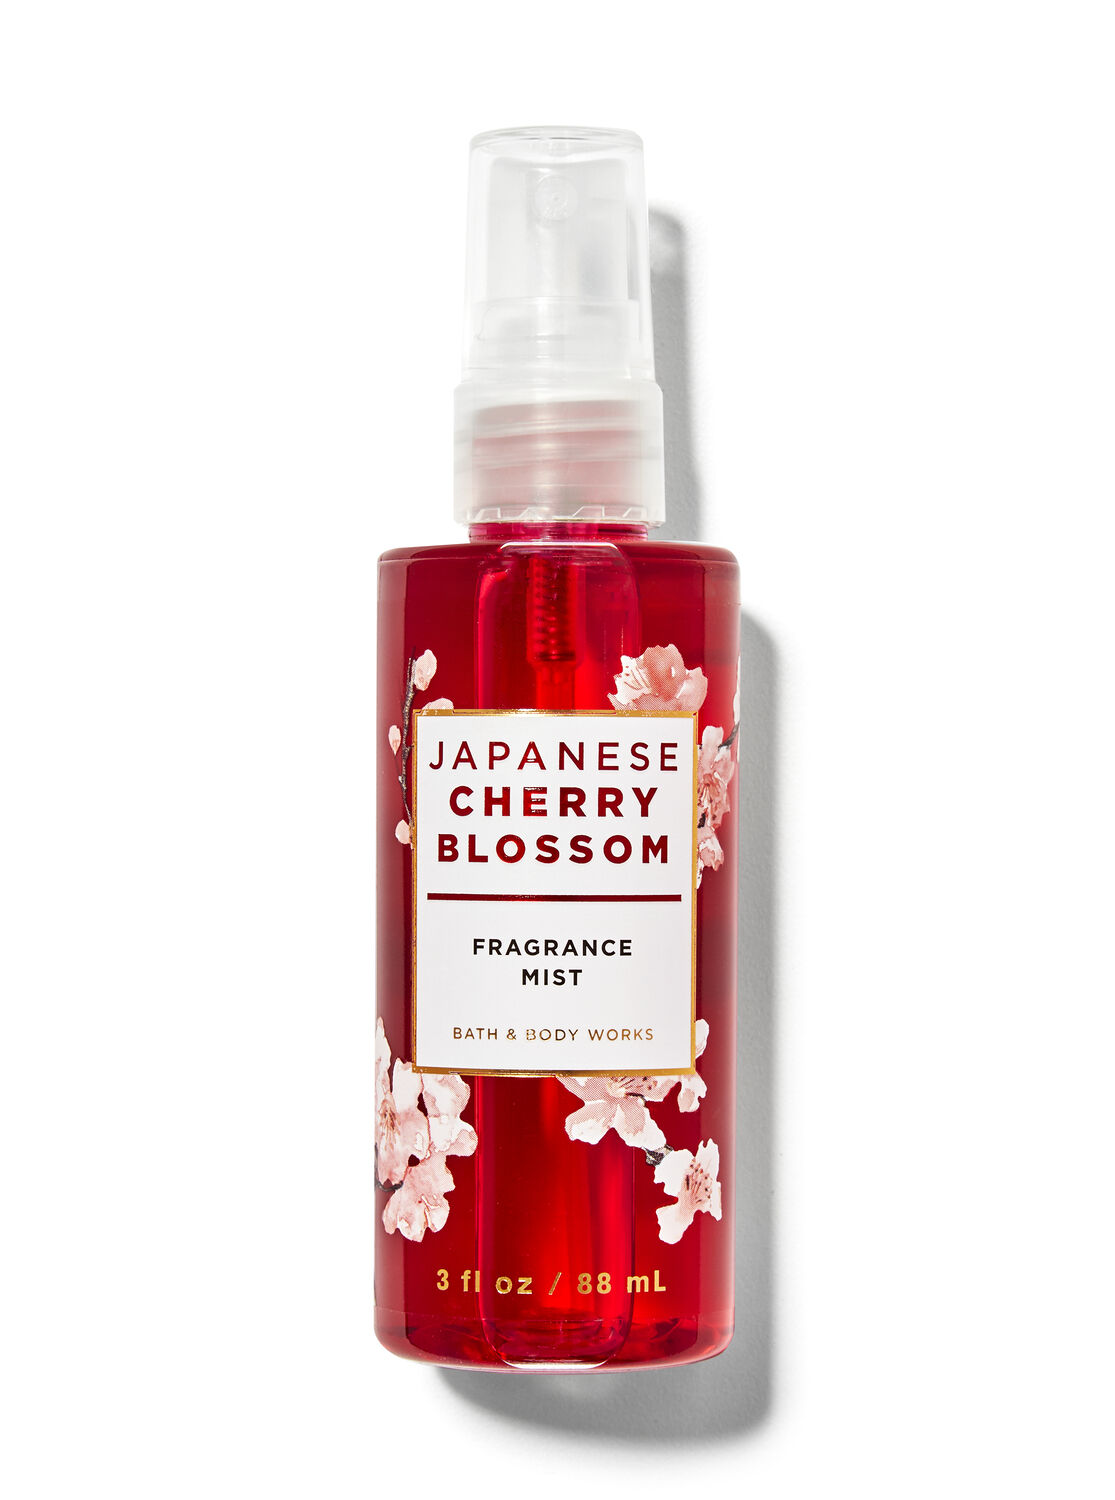 Cherry blossom bath and body works